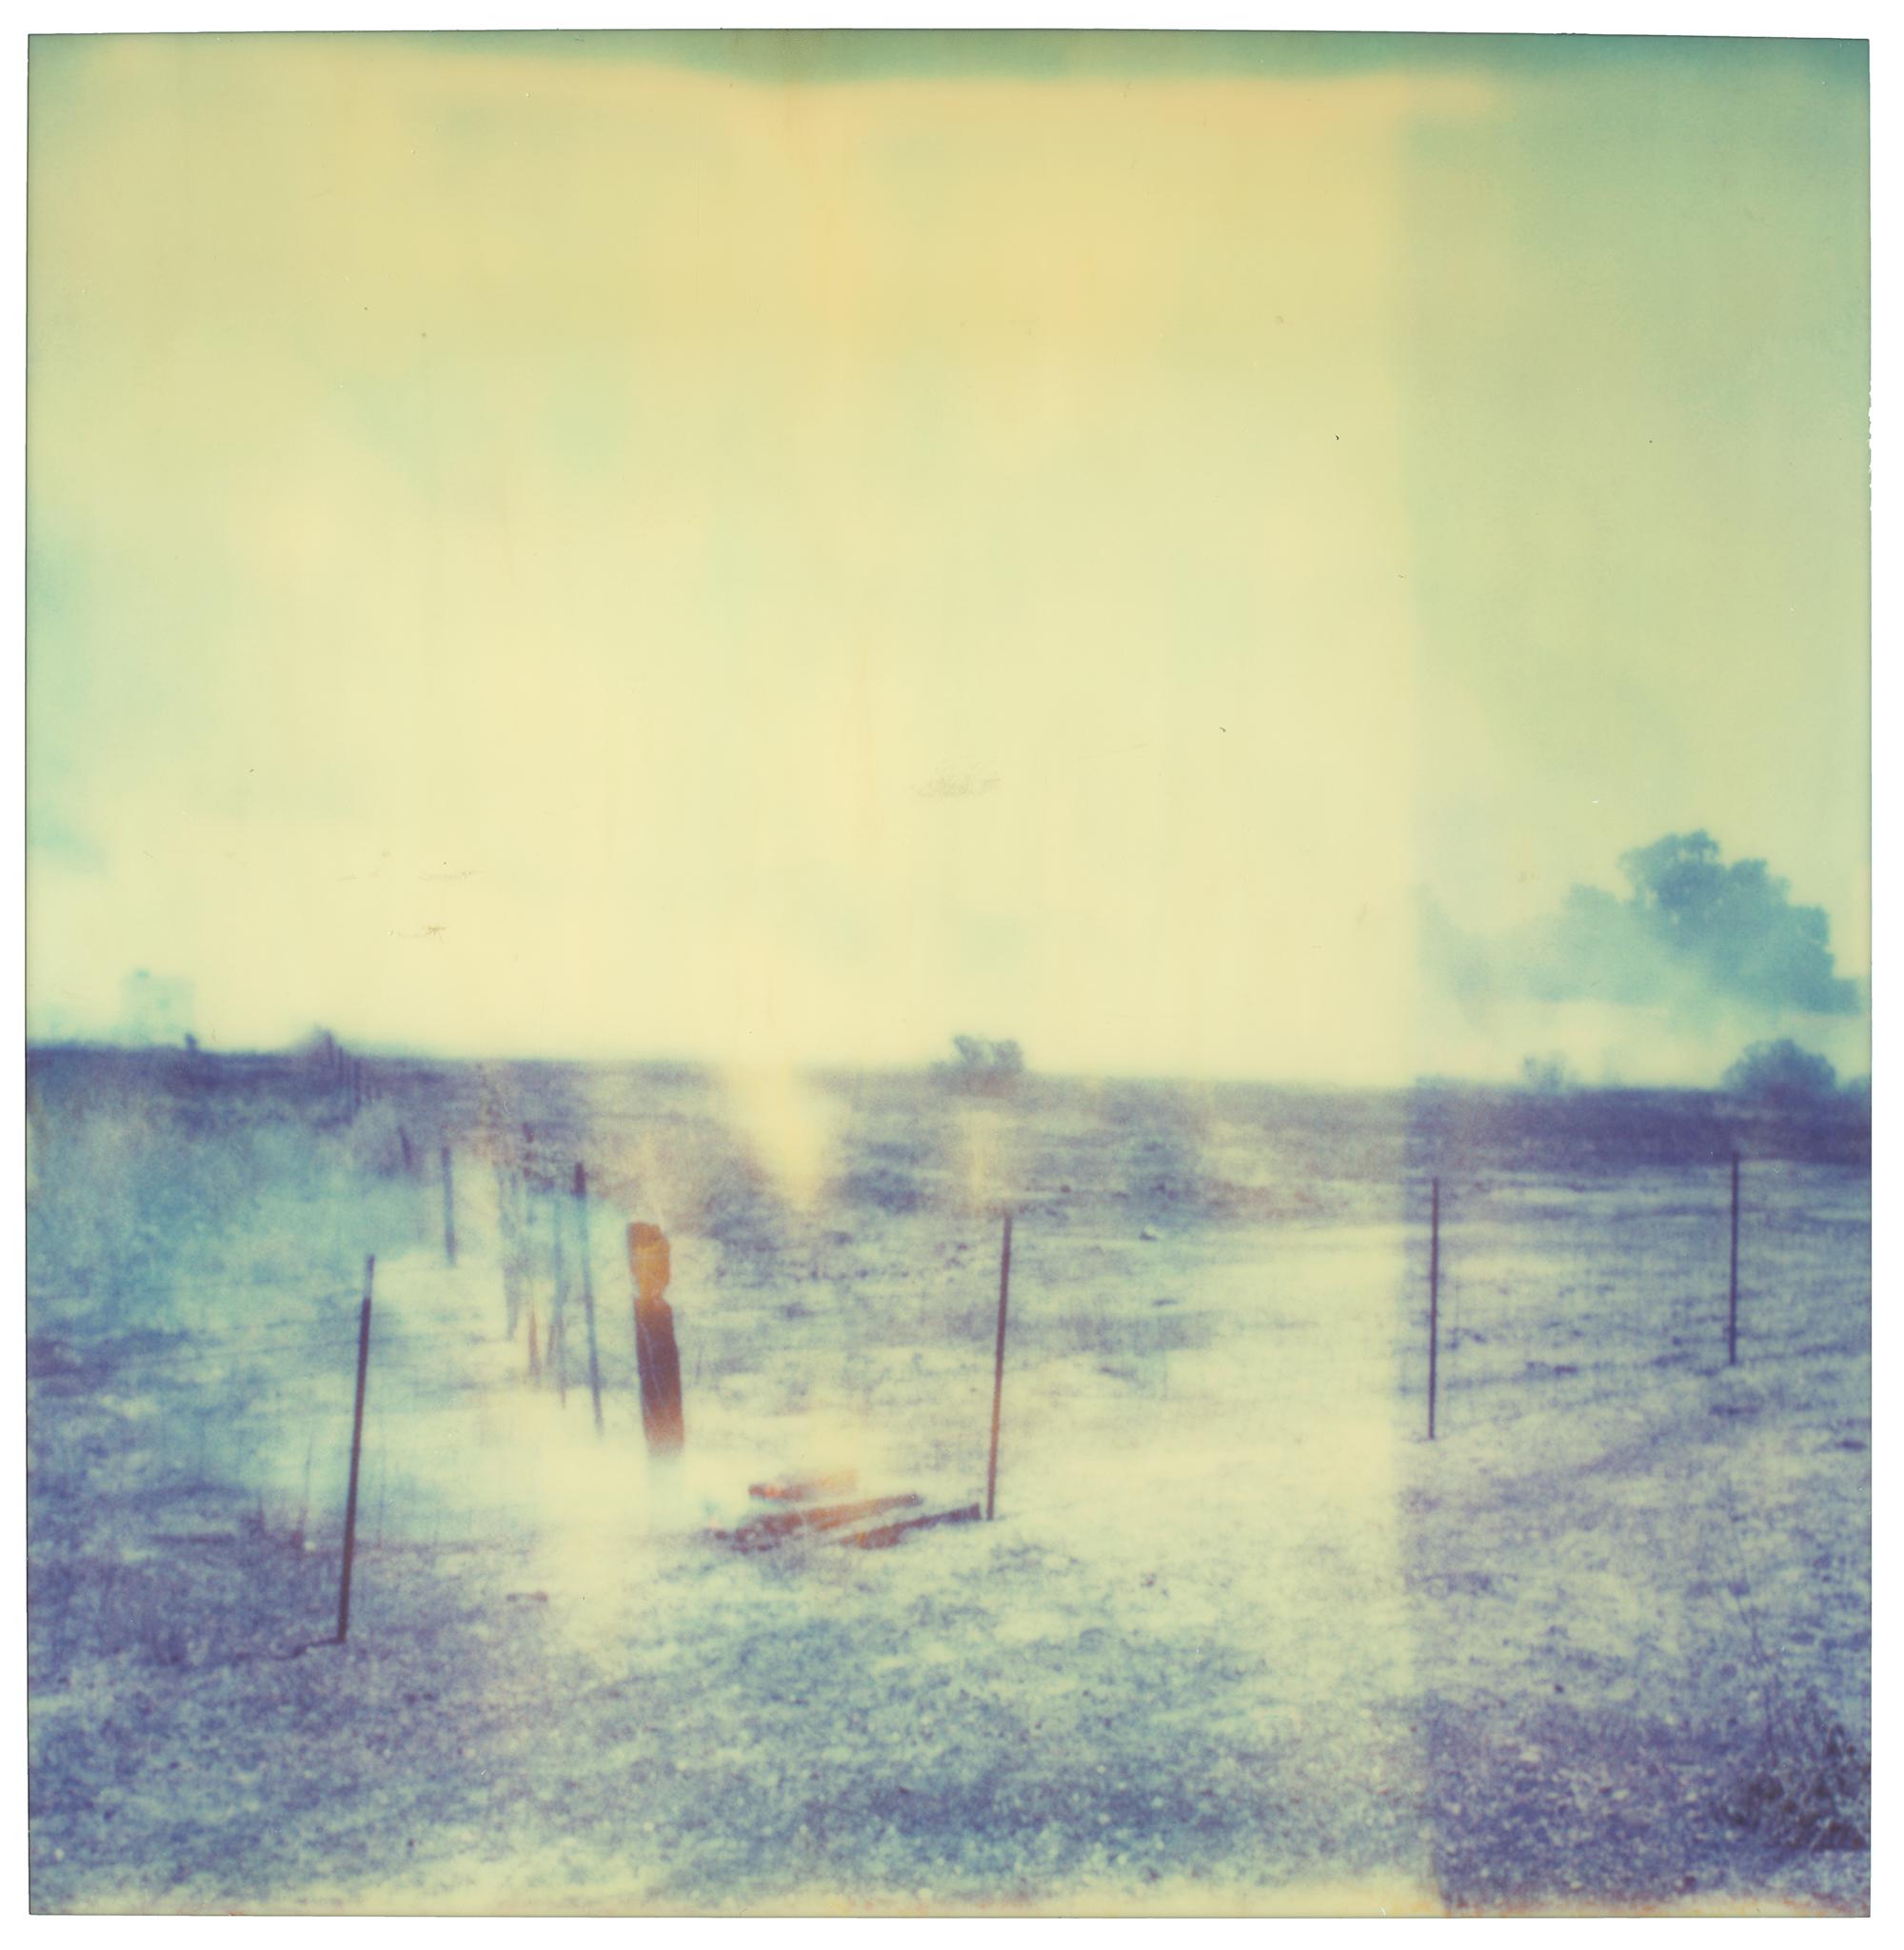 Burning Field III (Last Picture Show) - Analog C-print, Polaroid, Contemporary